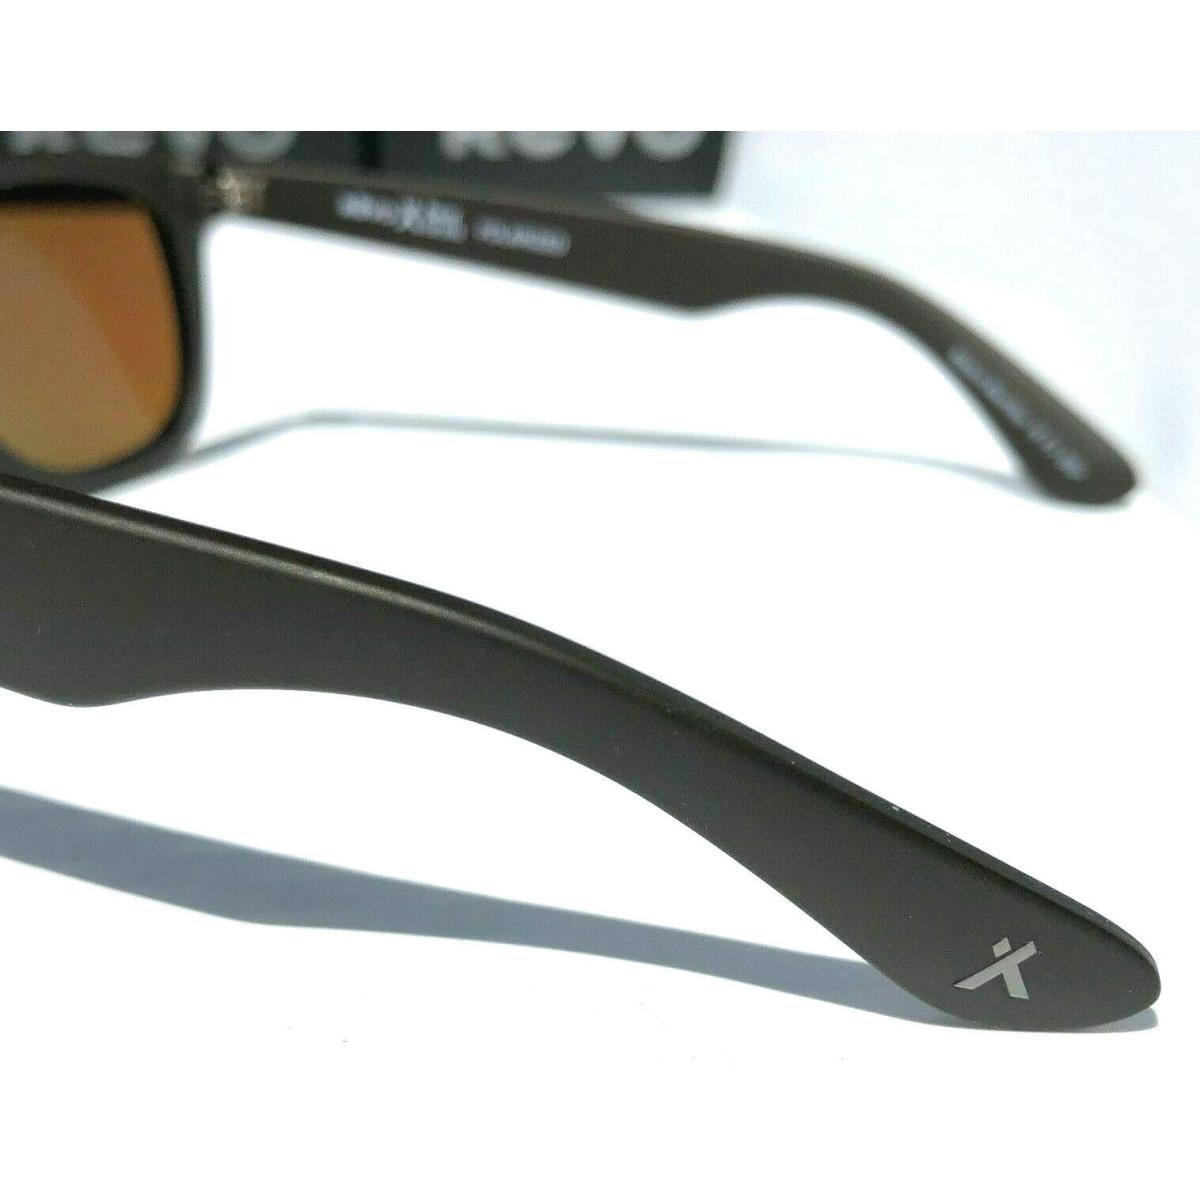 Revo sunglasses FORGE - Matte Brown Frame, Green Lens